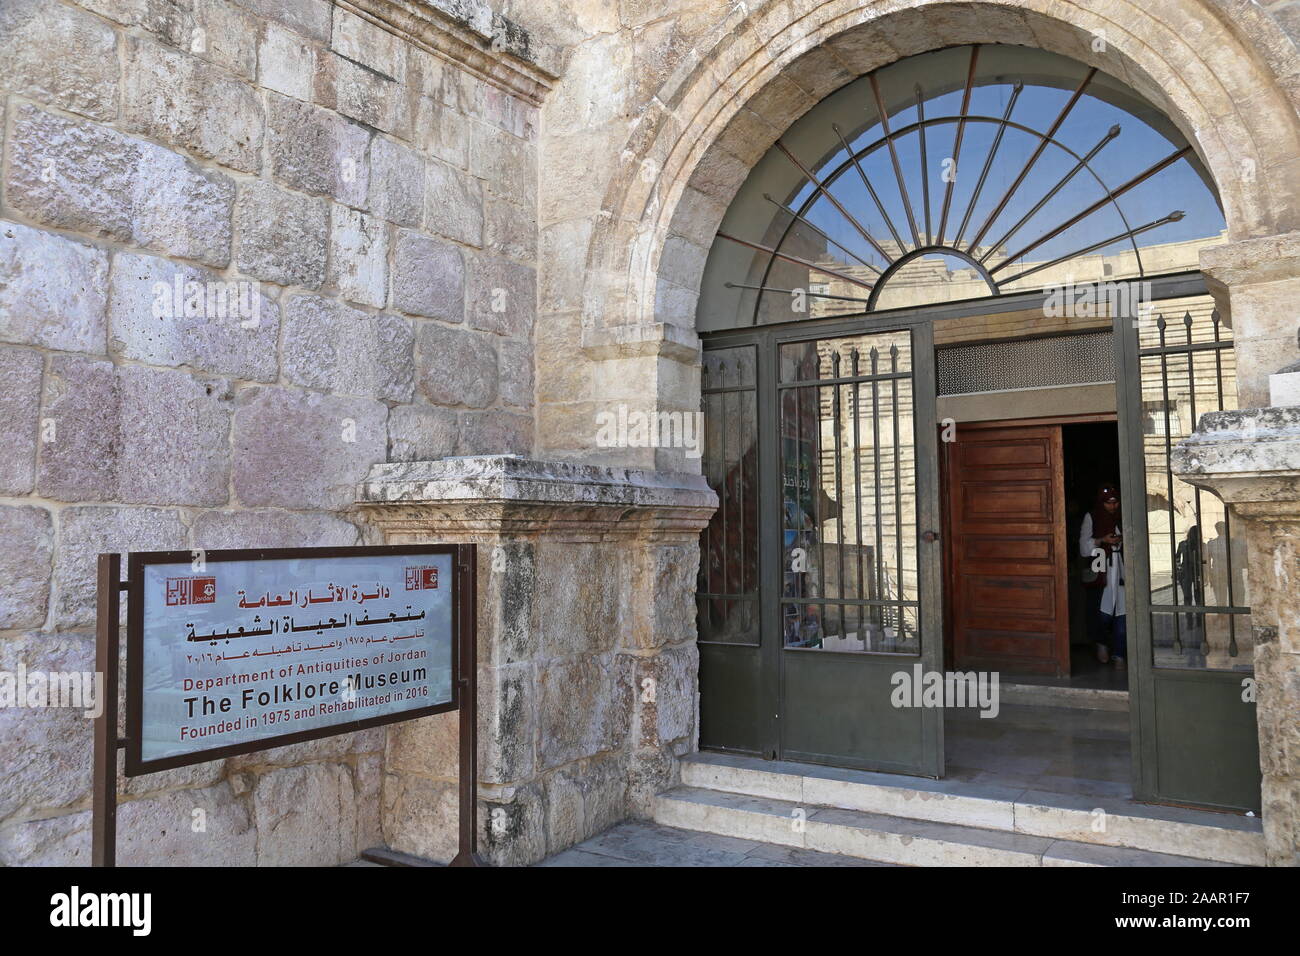 Folklore Museum, Roman Theatre, Al Hashemi Street, Amman, Jordan, Middle  East Stock Photo - Alamy